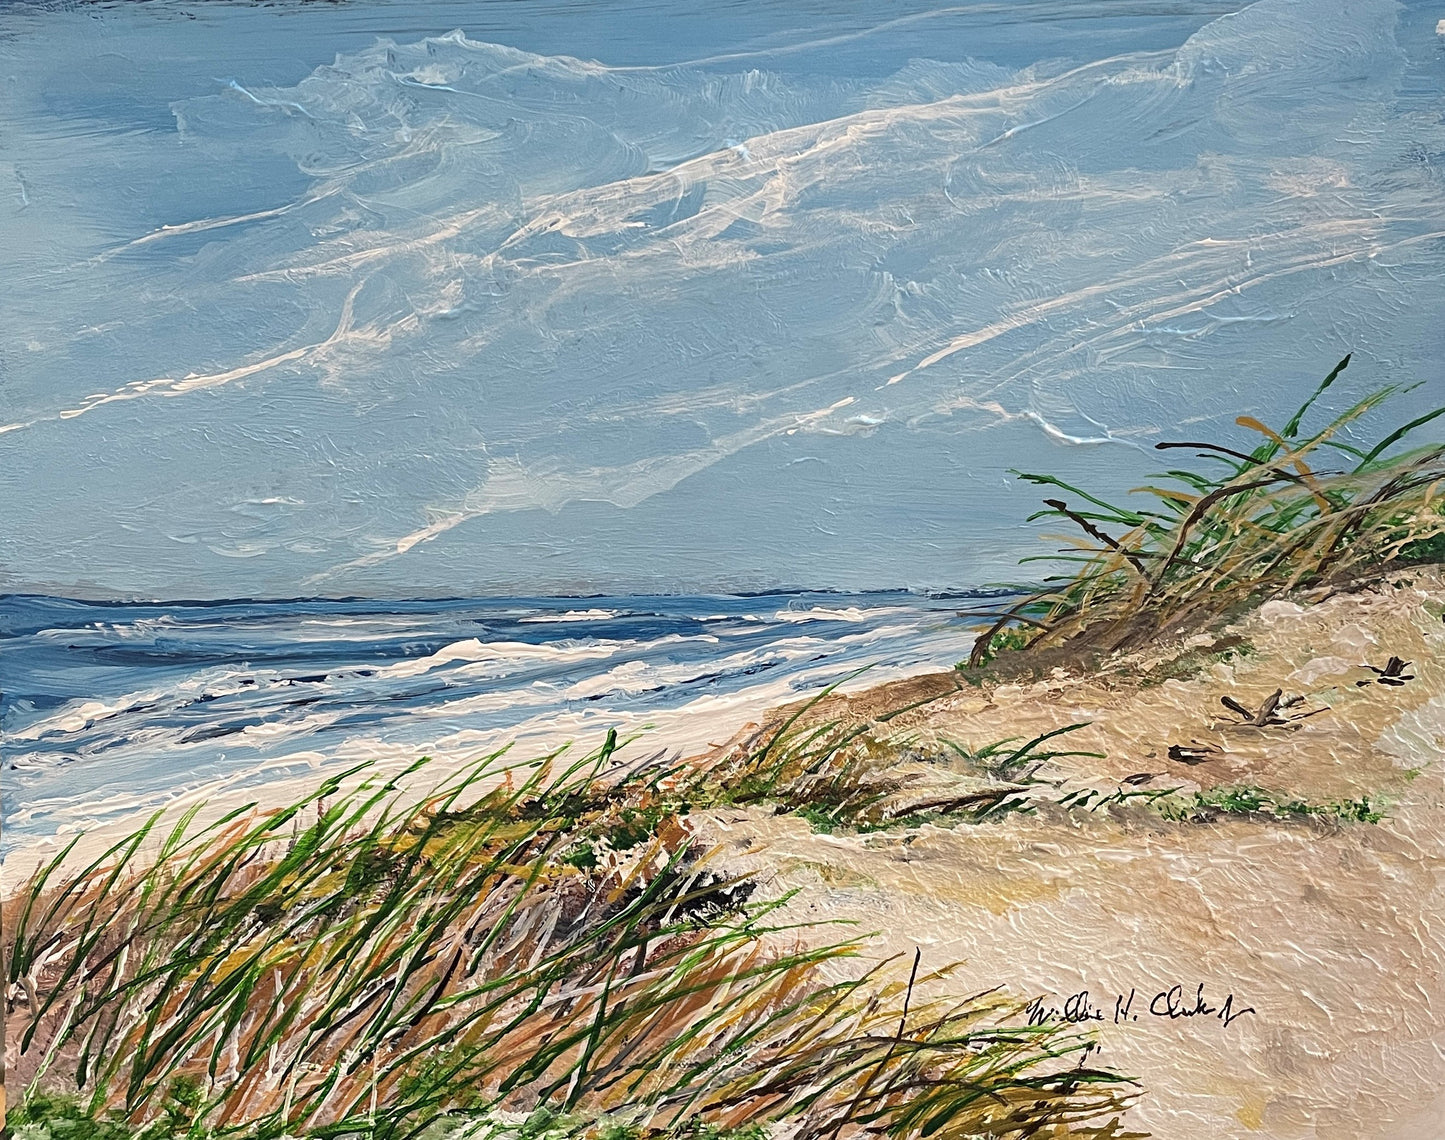 Seagrass at Myrtle Beach South Carolina Original Painting